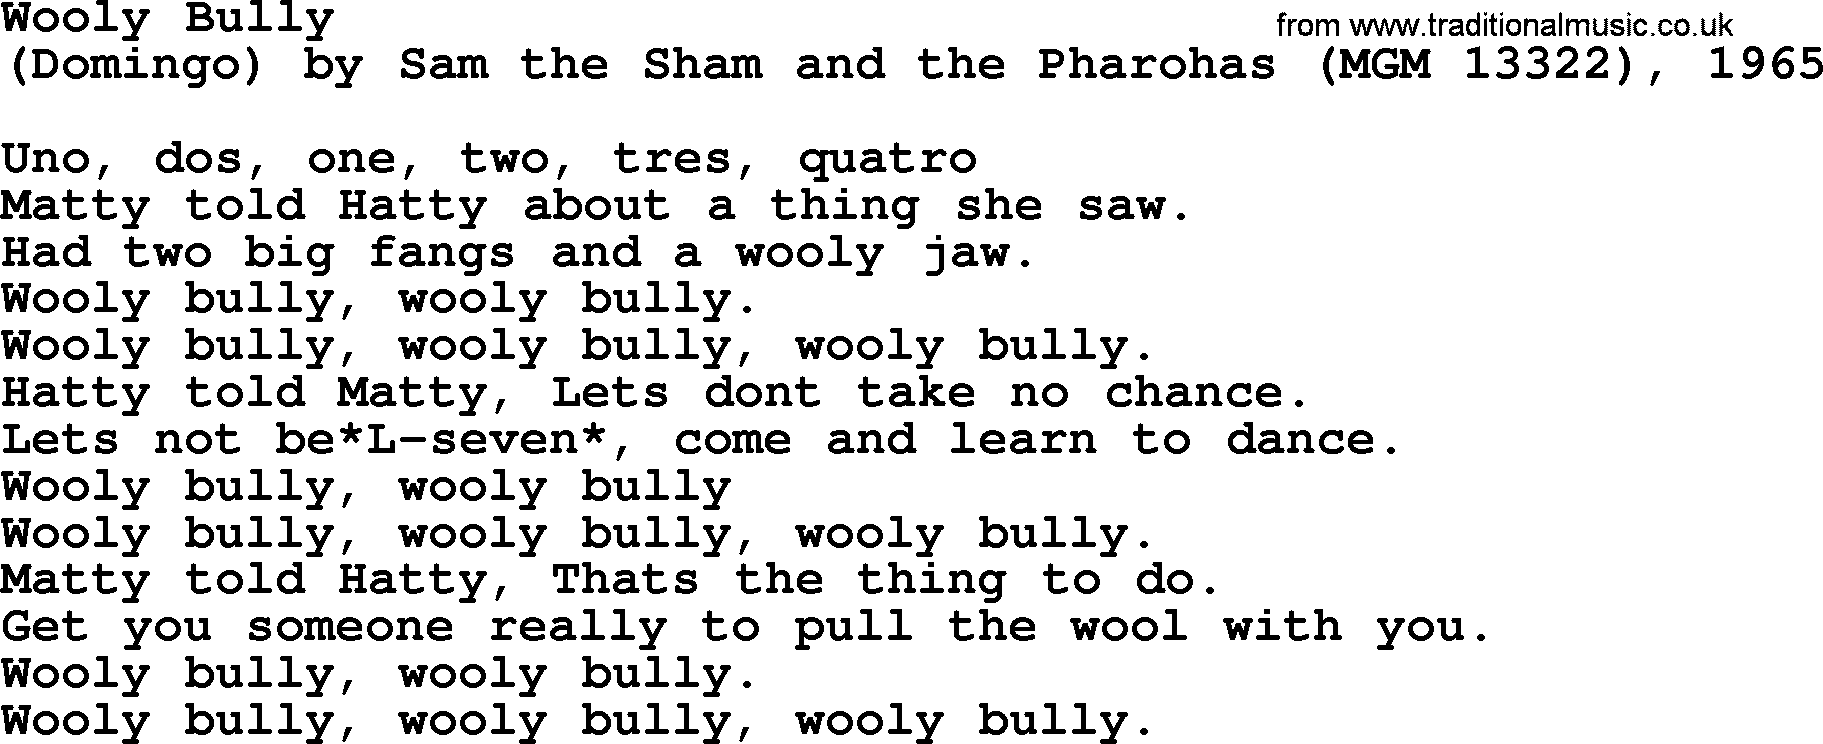 Bruce Springsteen song: Wooly Bully lyrics